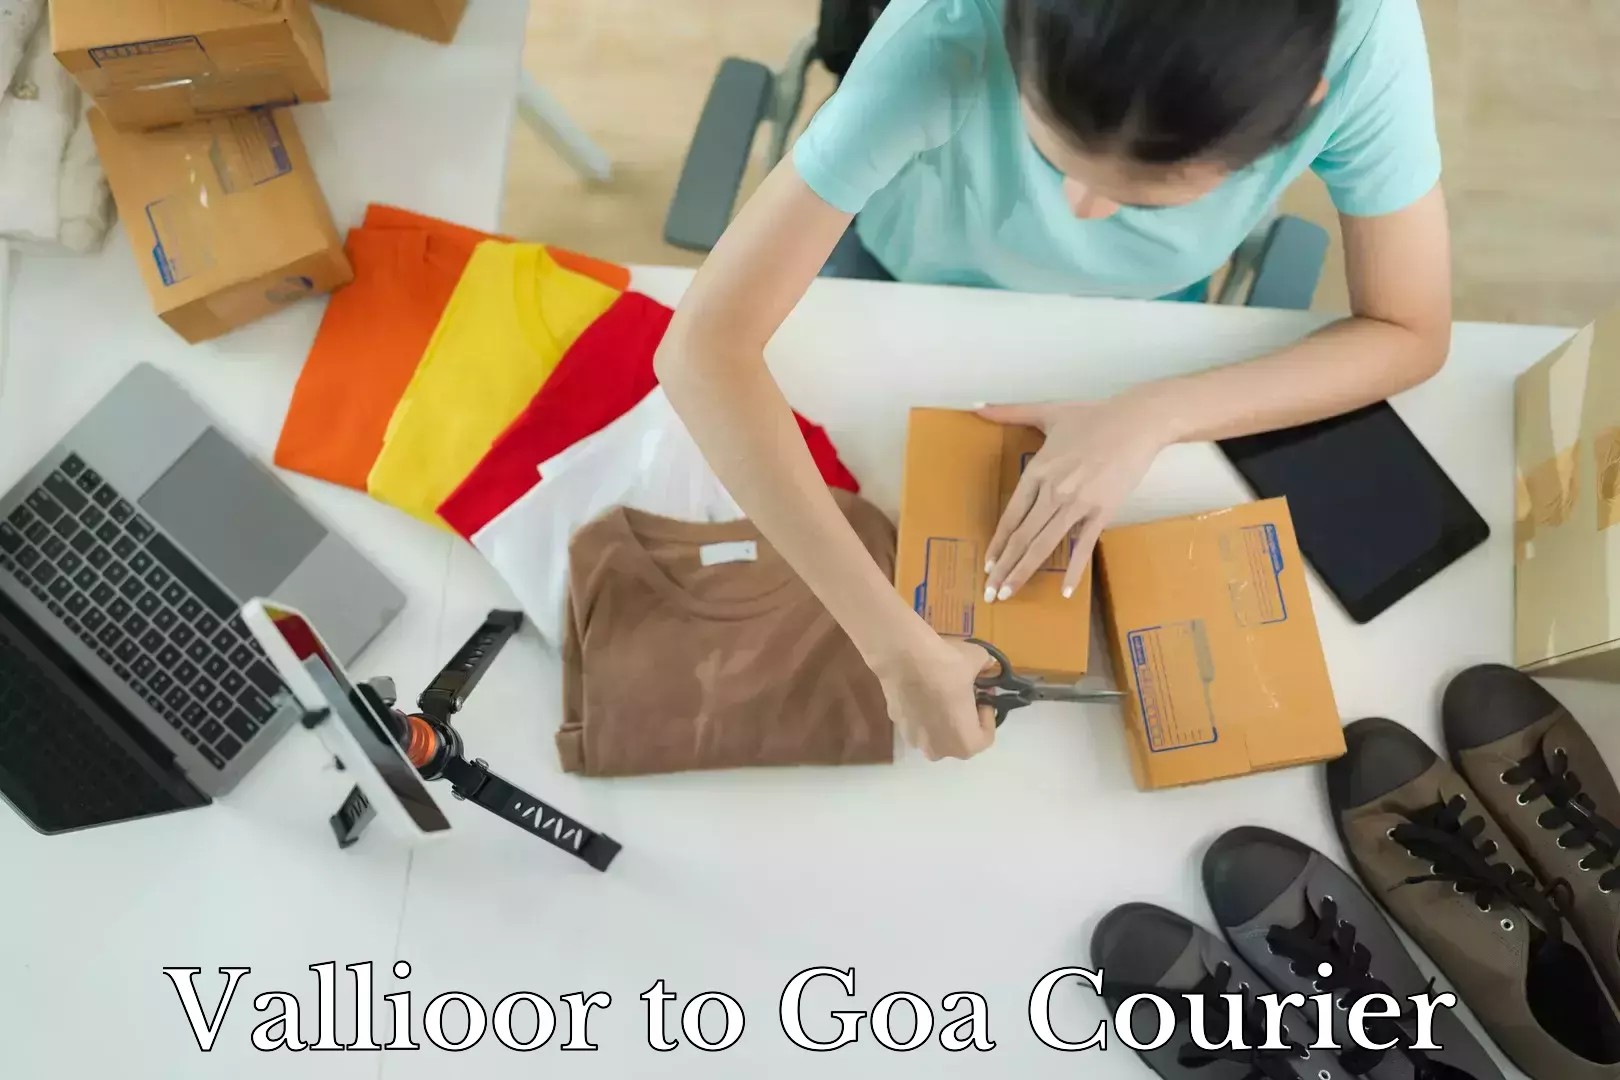 International courier networks Vallioor to Goa